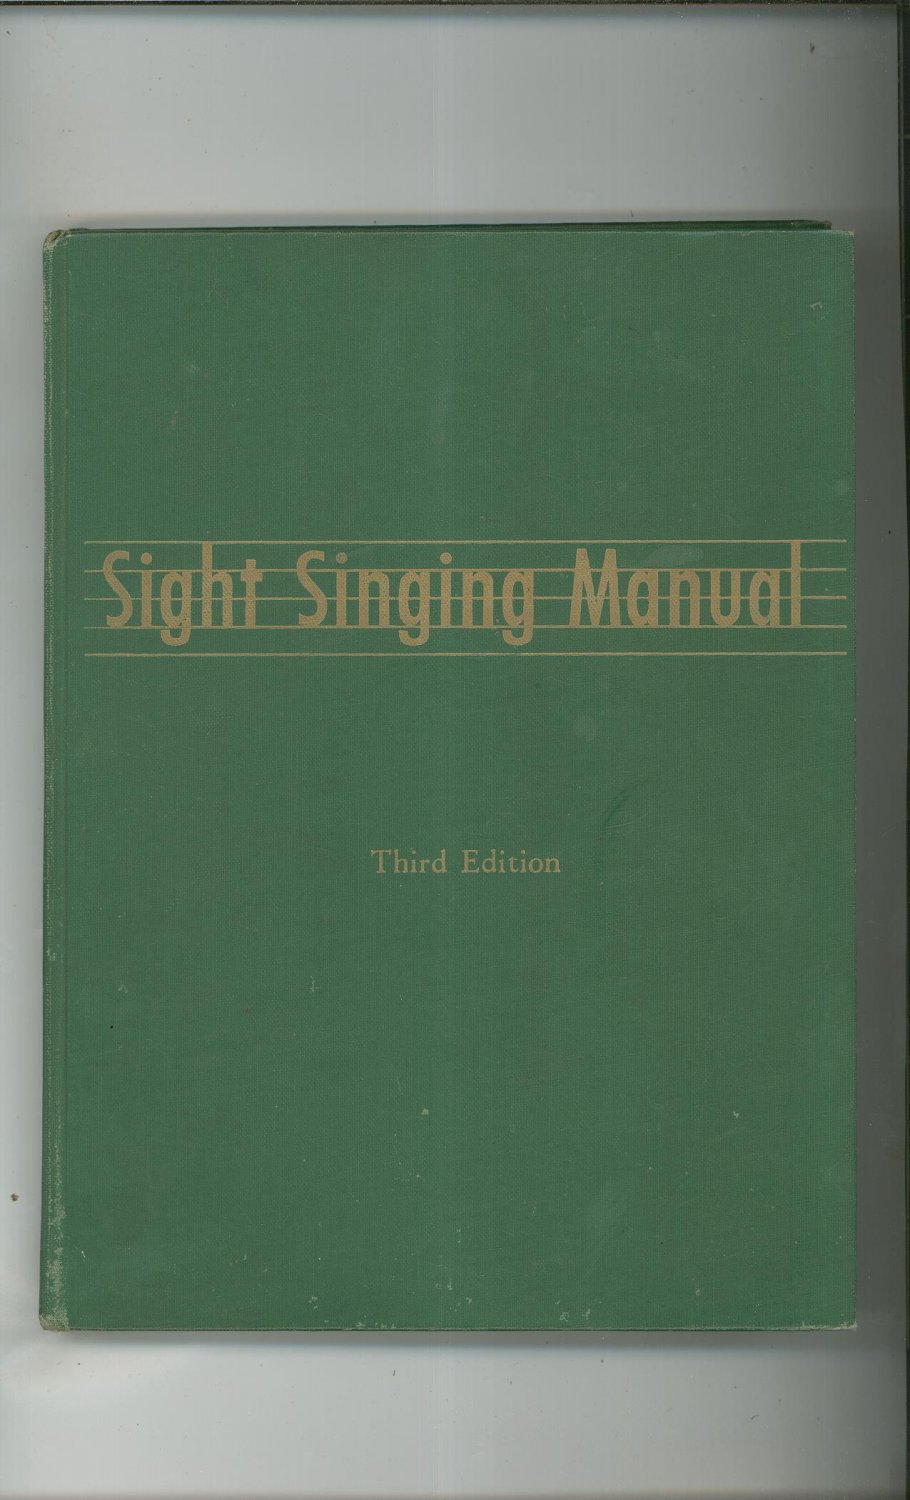 Vintage Sight Singing Manual Third Edition McHose & Tibbs